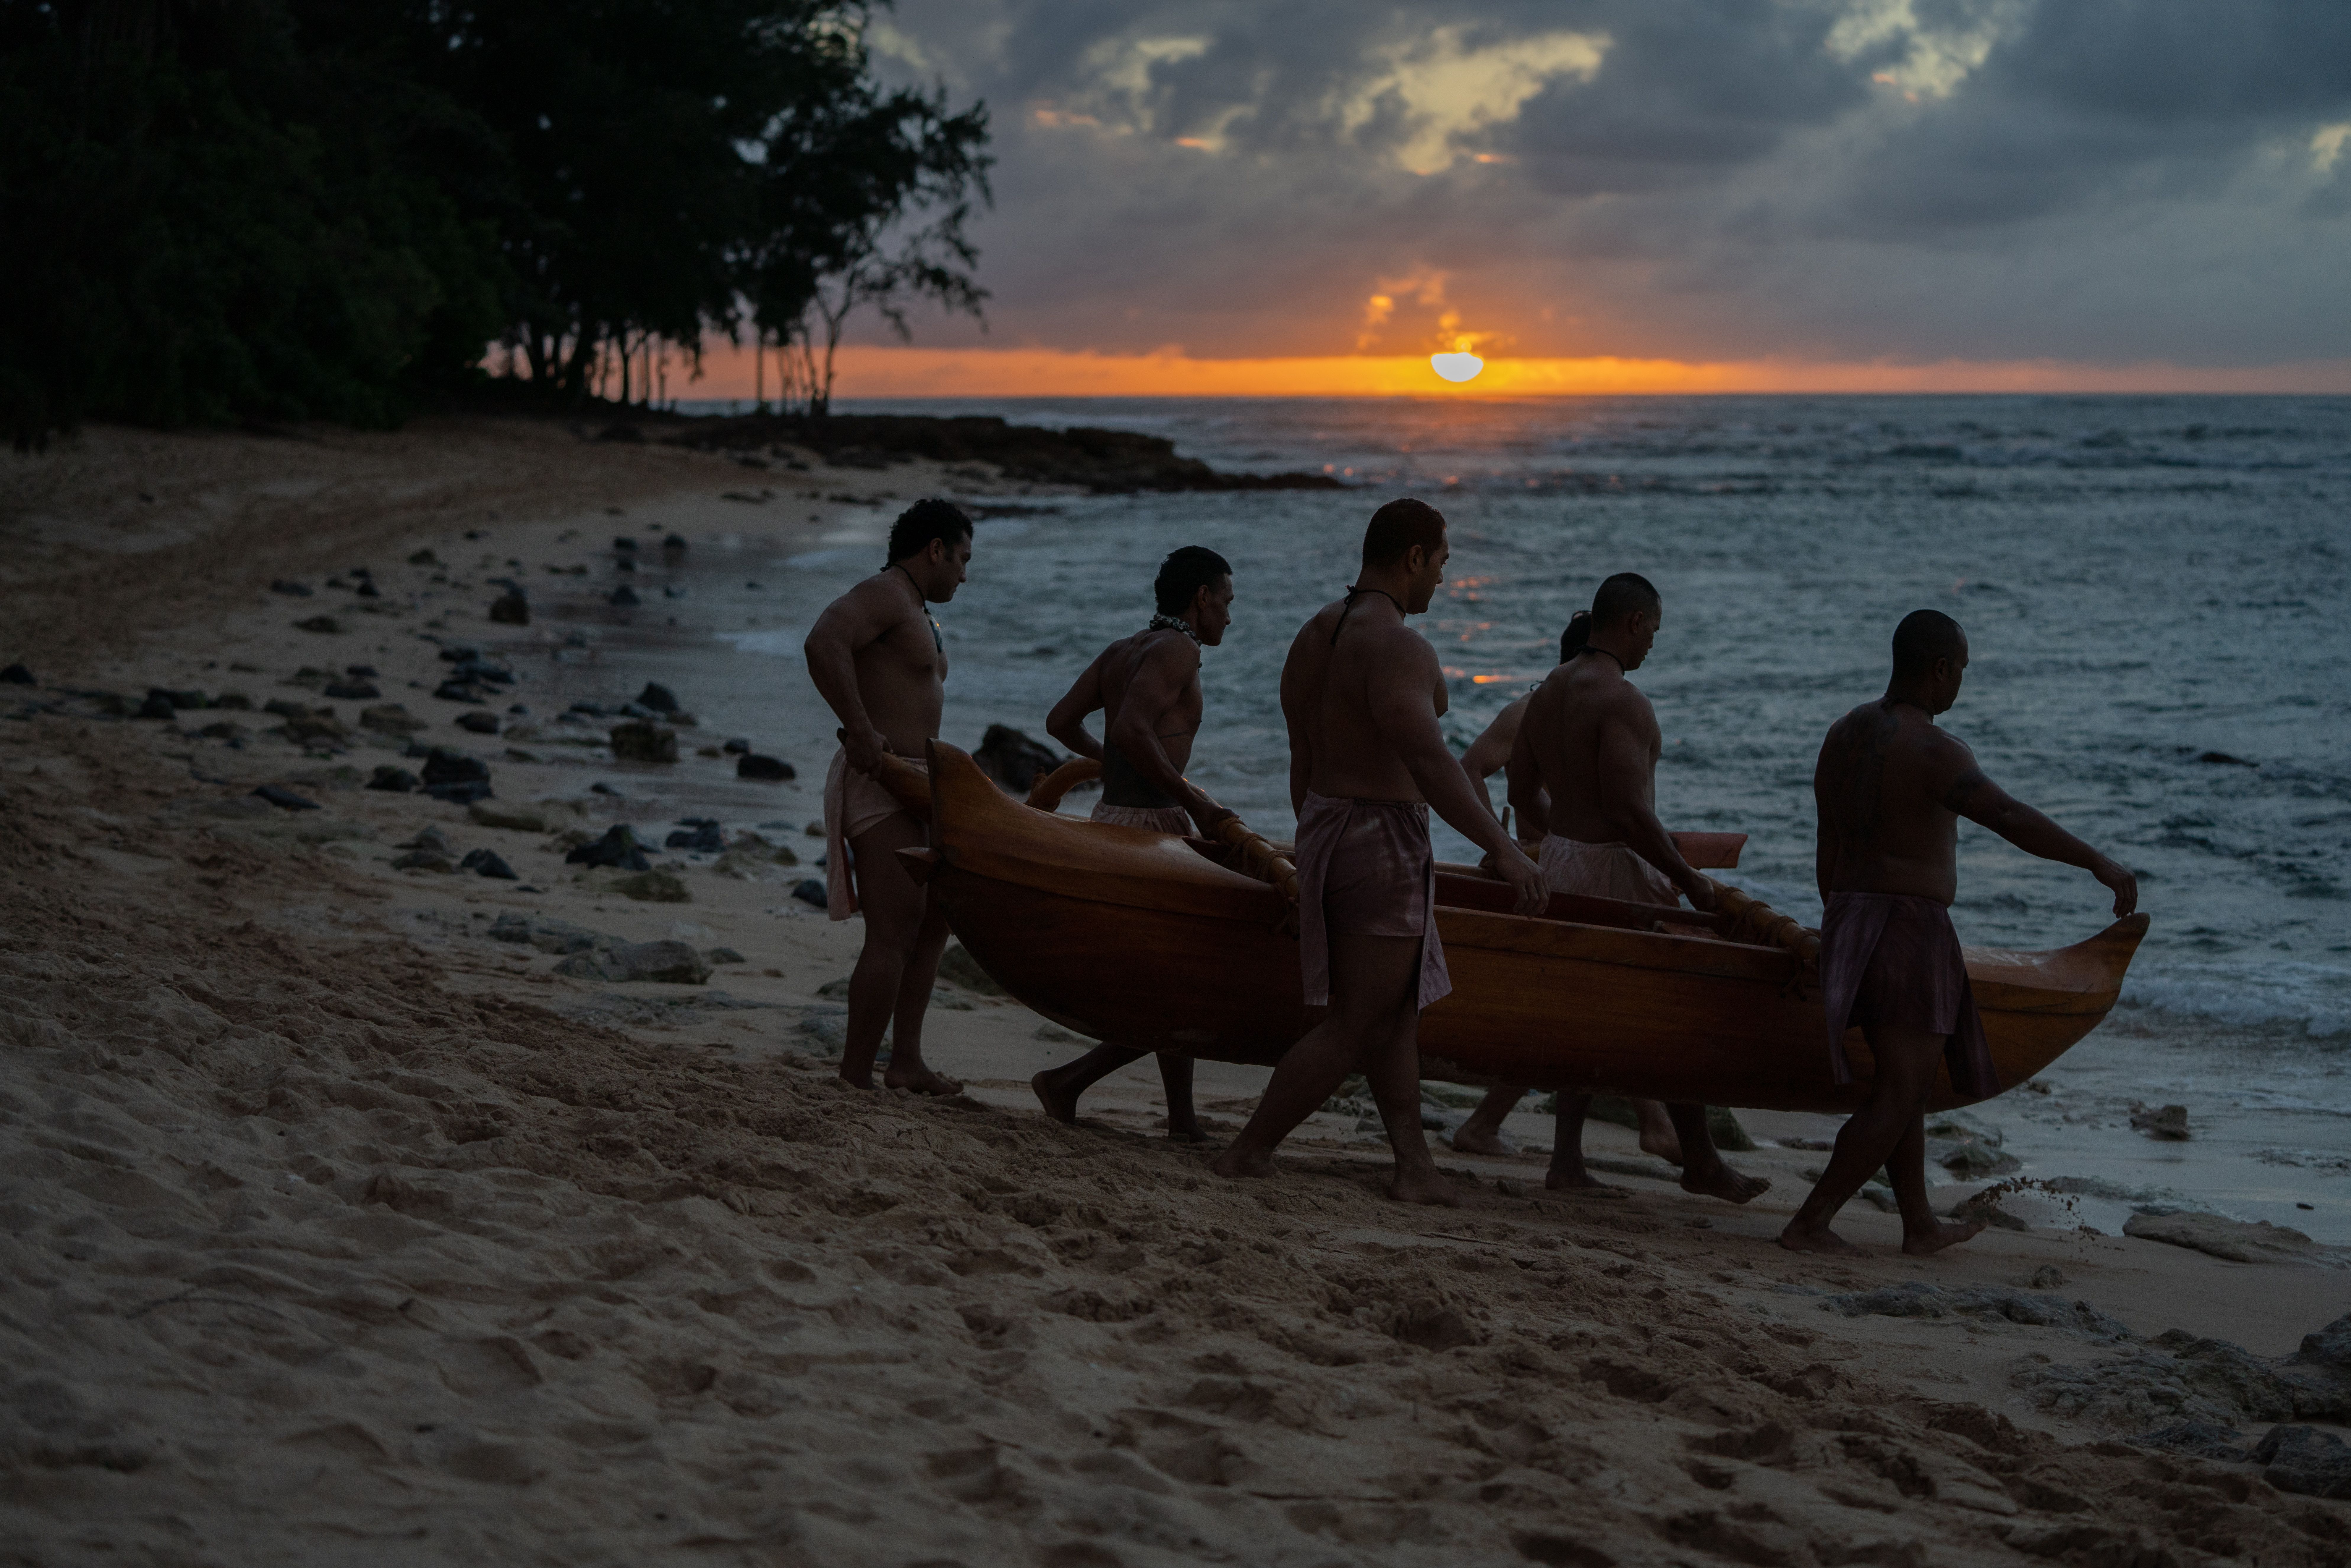 Mahalo i ka aina lead image. Photo of men and canoe at the beach in Laie, Oahu, Hawaii.